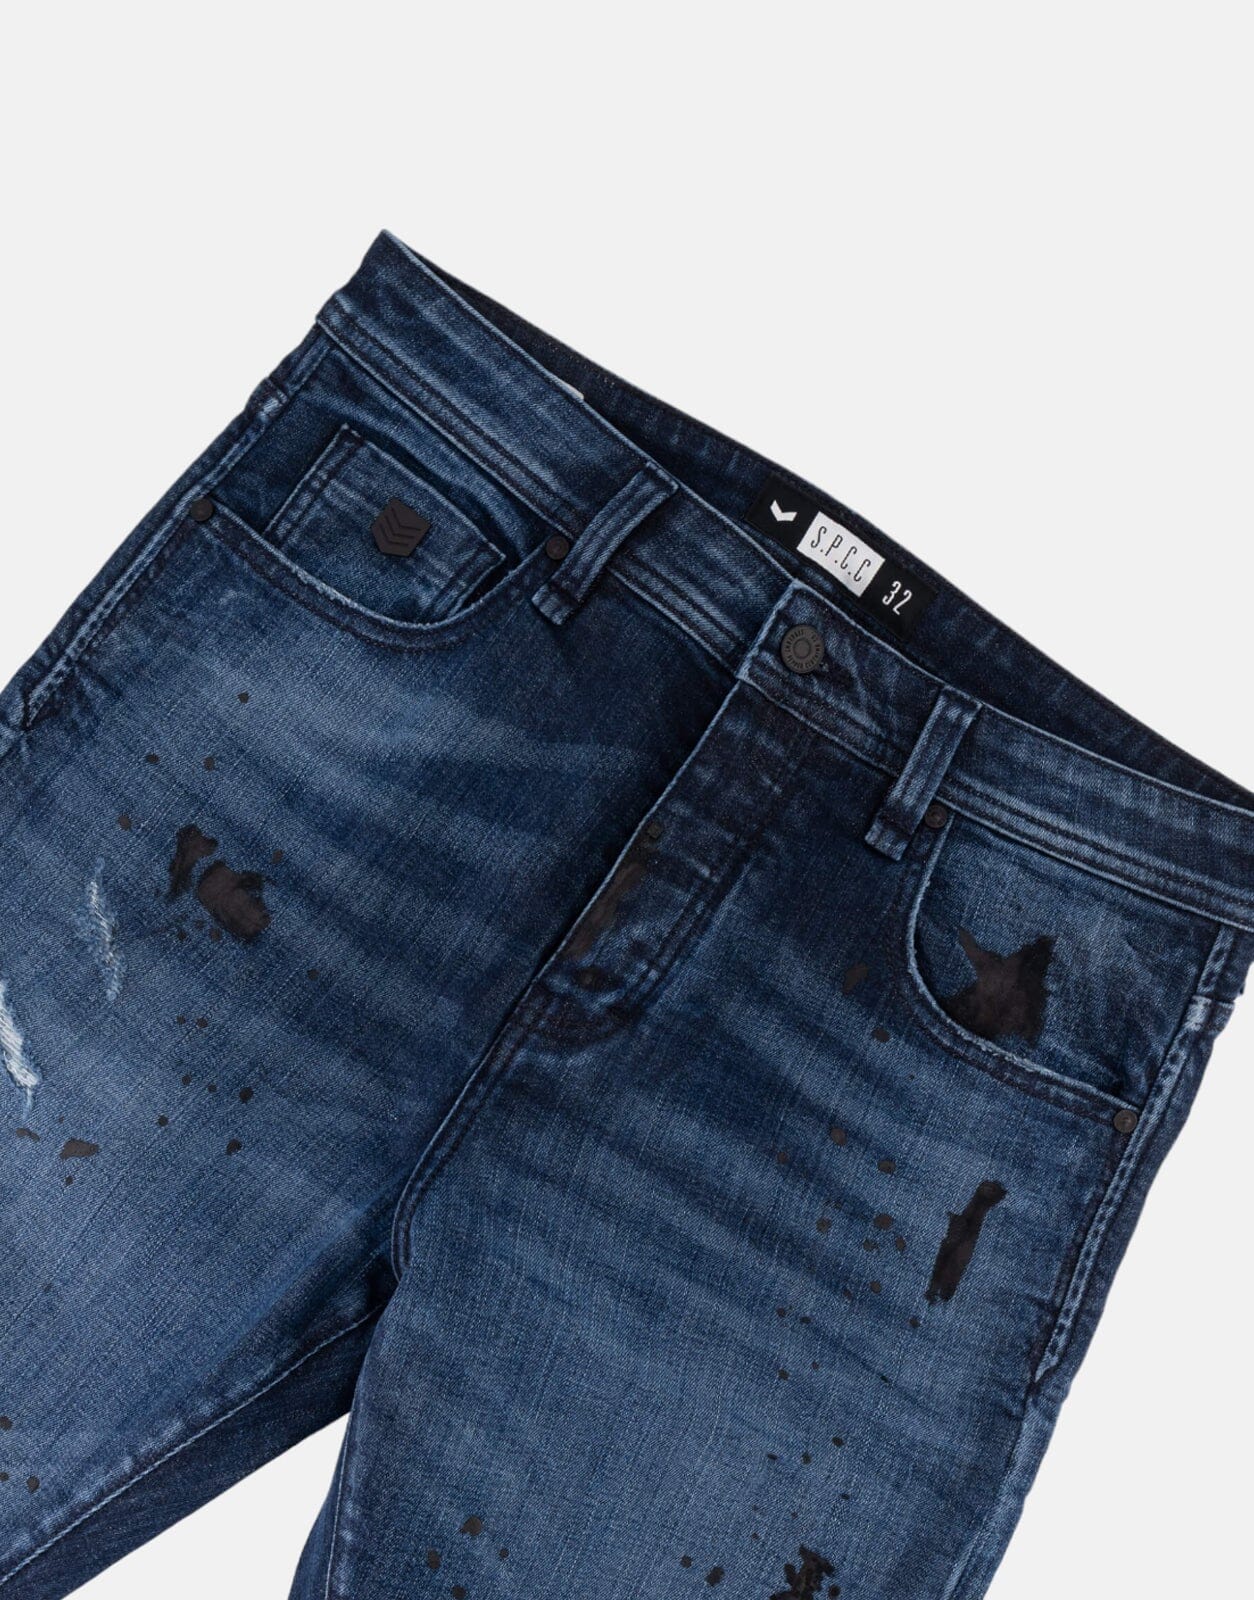 SPCC Cortana Indigo Jeans - Subwear